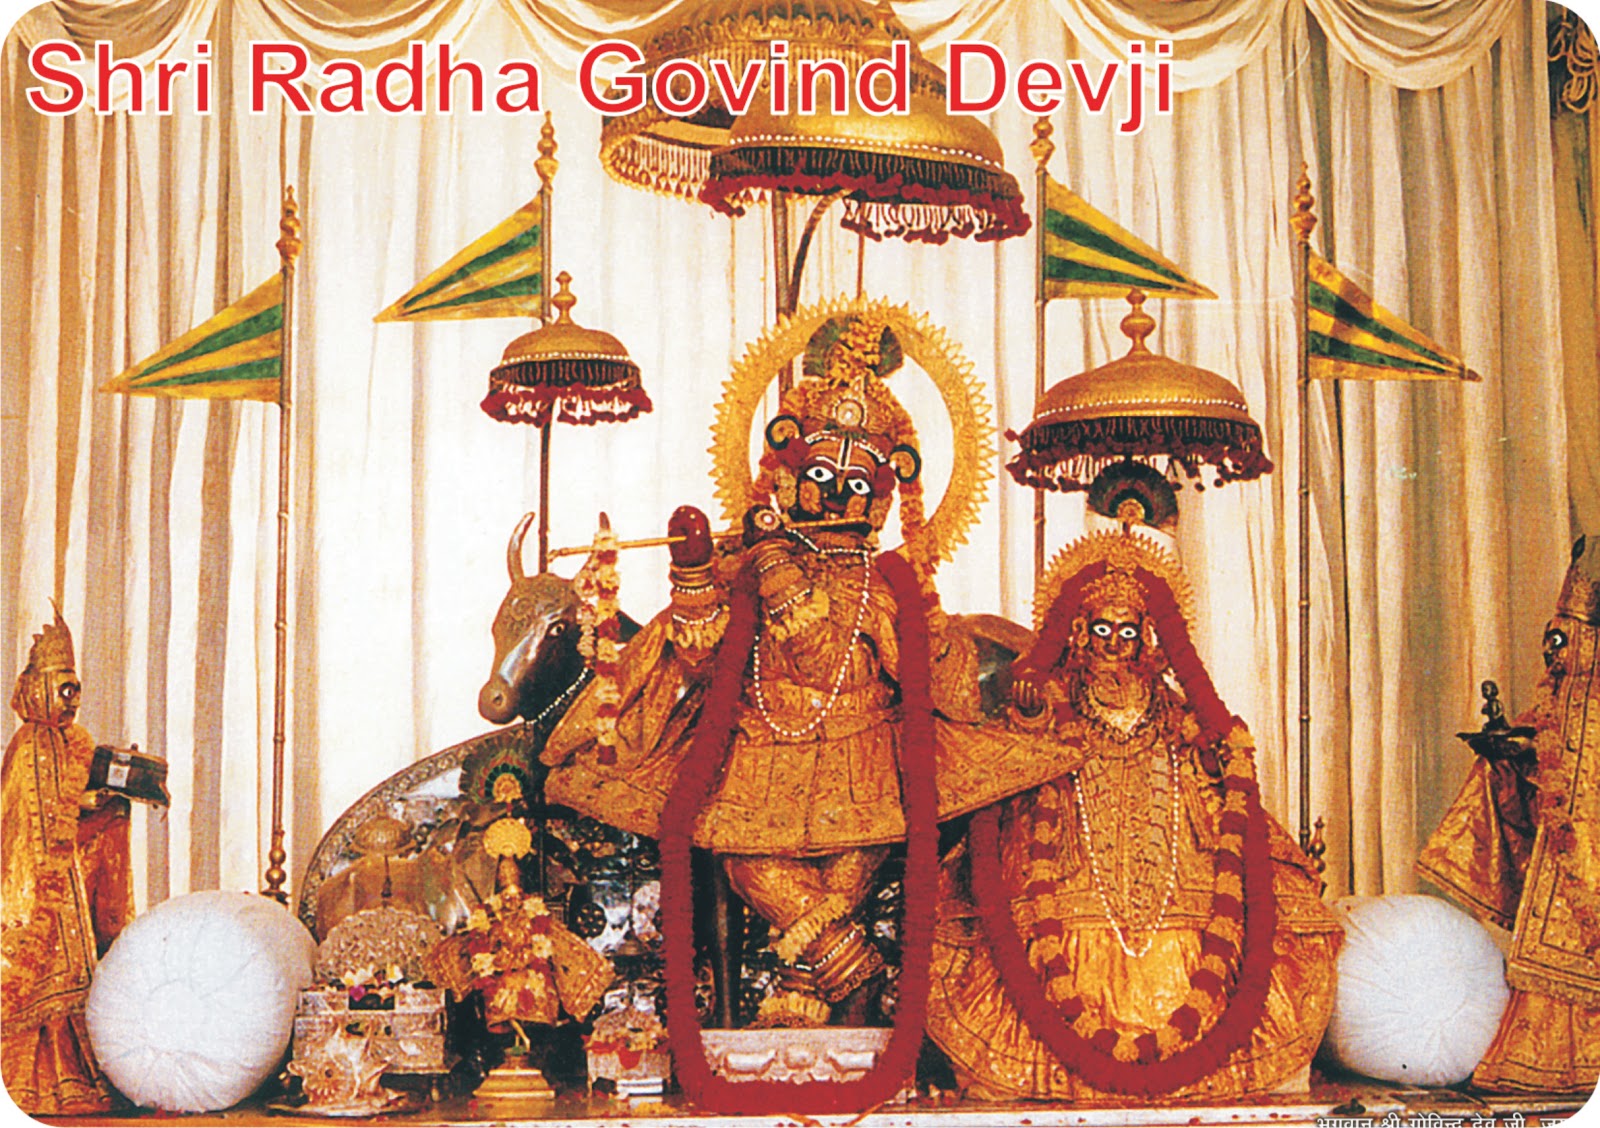 ... Govind dev ji at Jaipur | Latest Krishna Wallpaper and Krishna